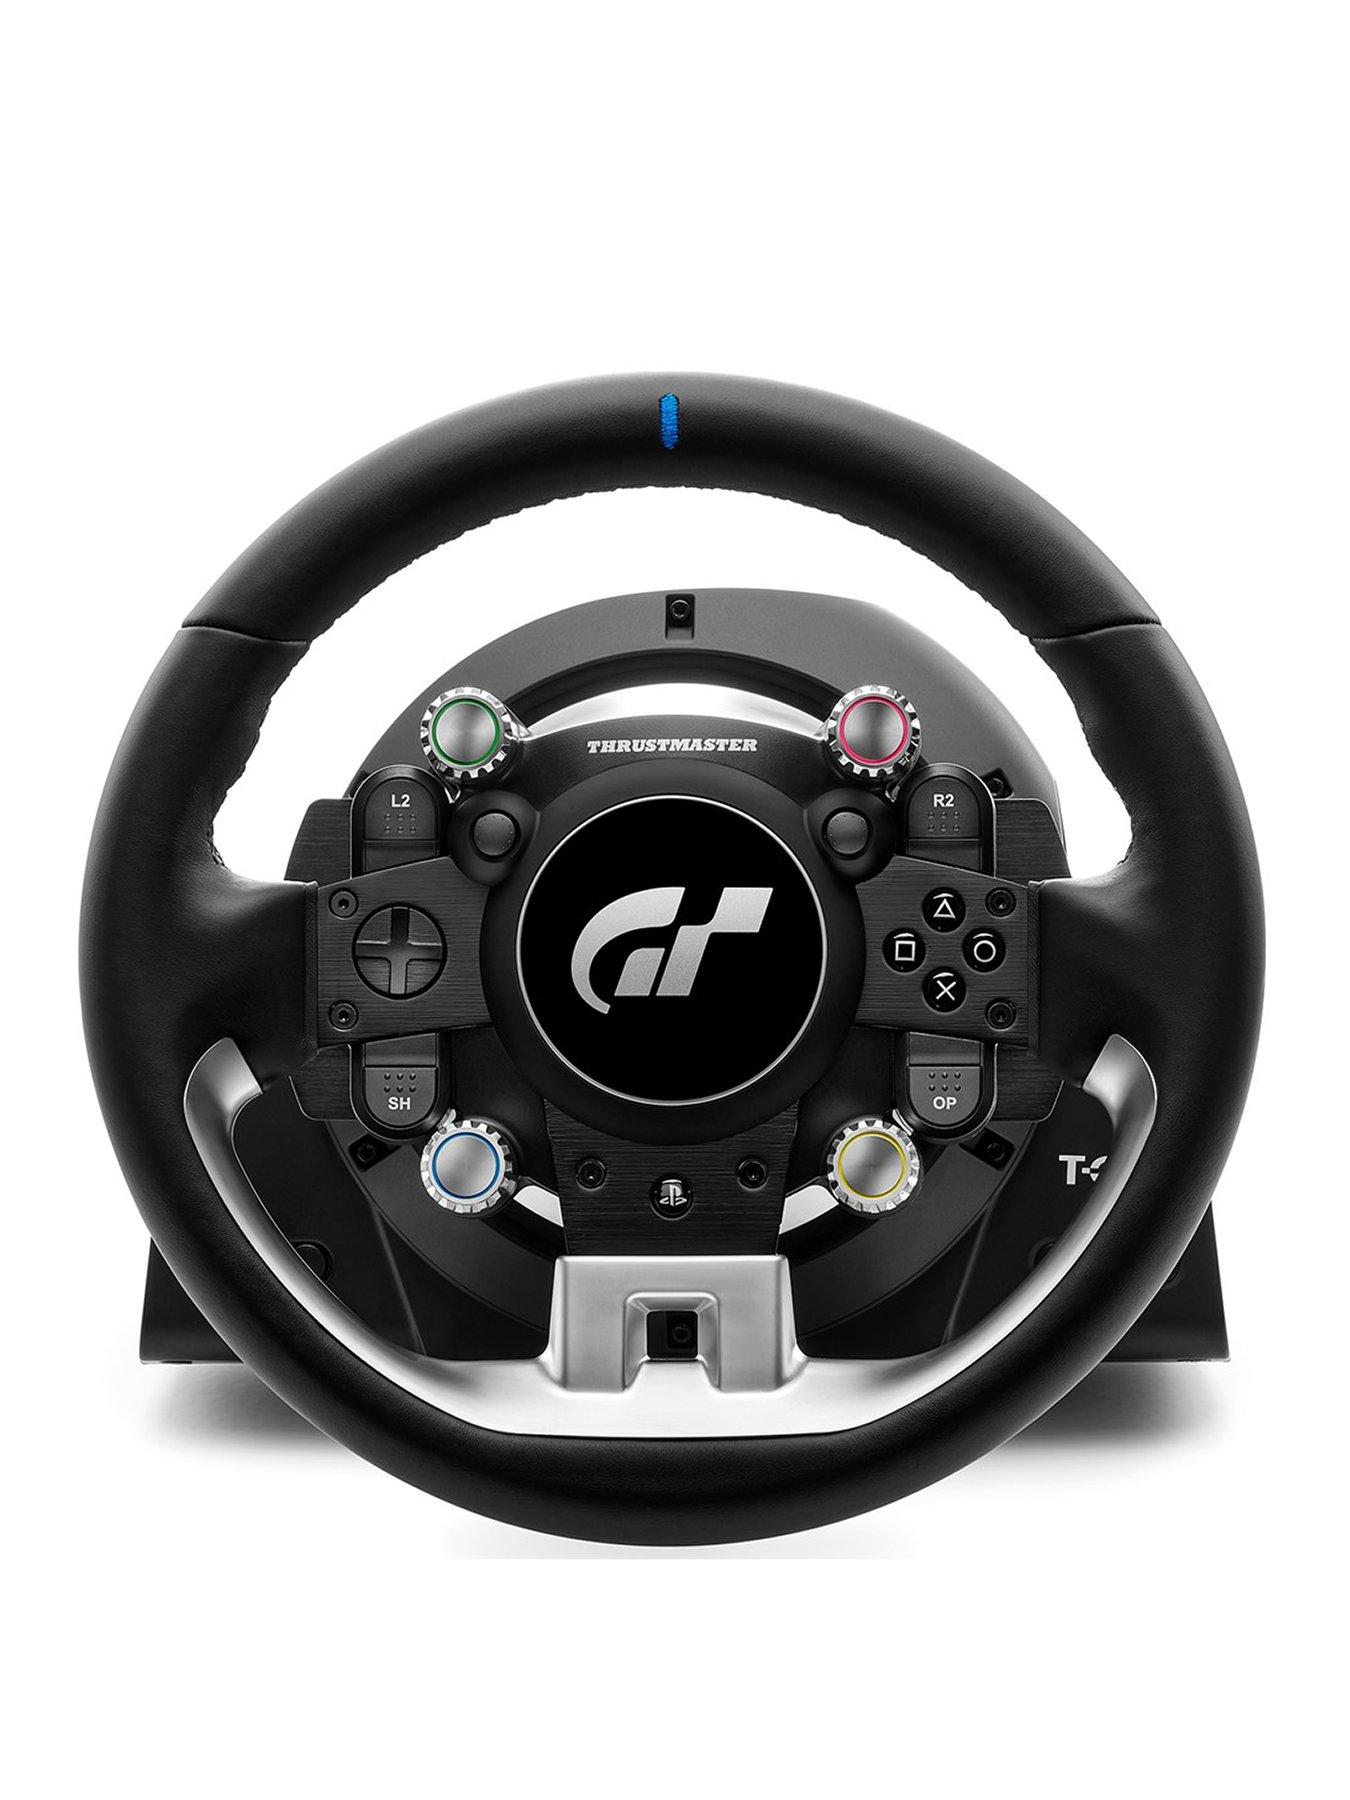 PS5) Gran Turismo 7 IS BEAUTIFUL - Ferrari 458 Italia Gameplay